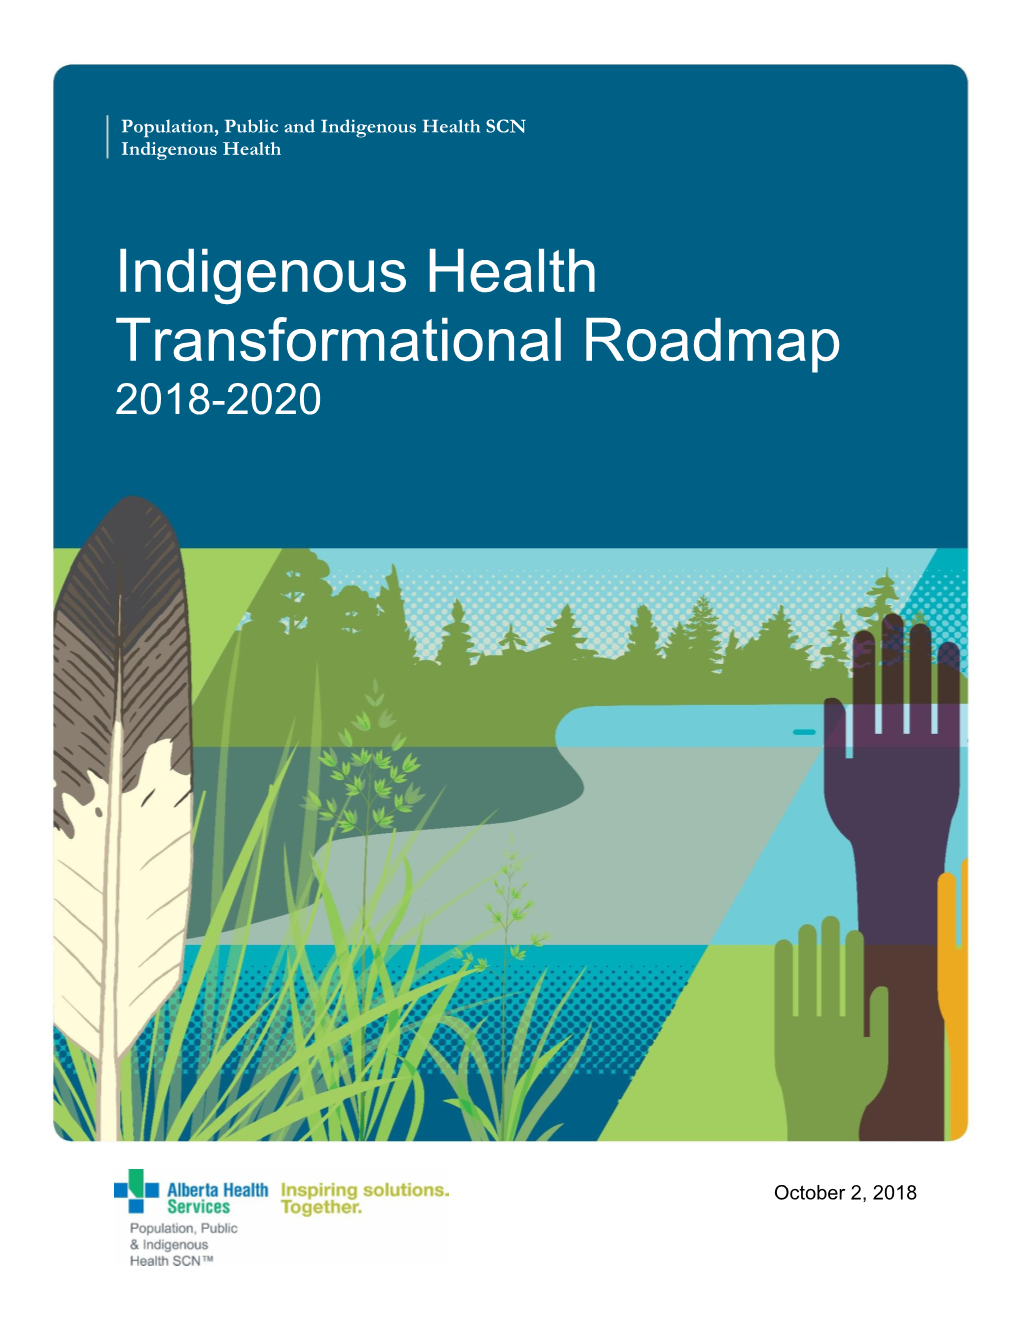 Indigenous Health Transformation Roadmap